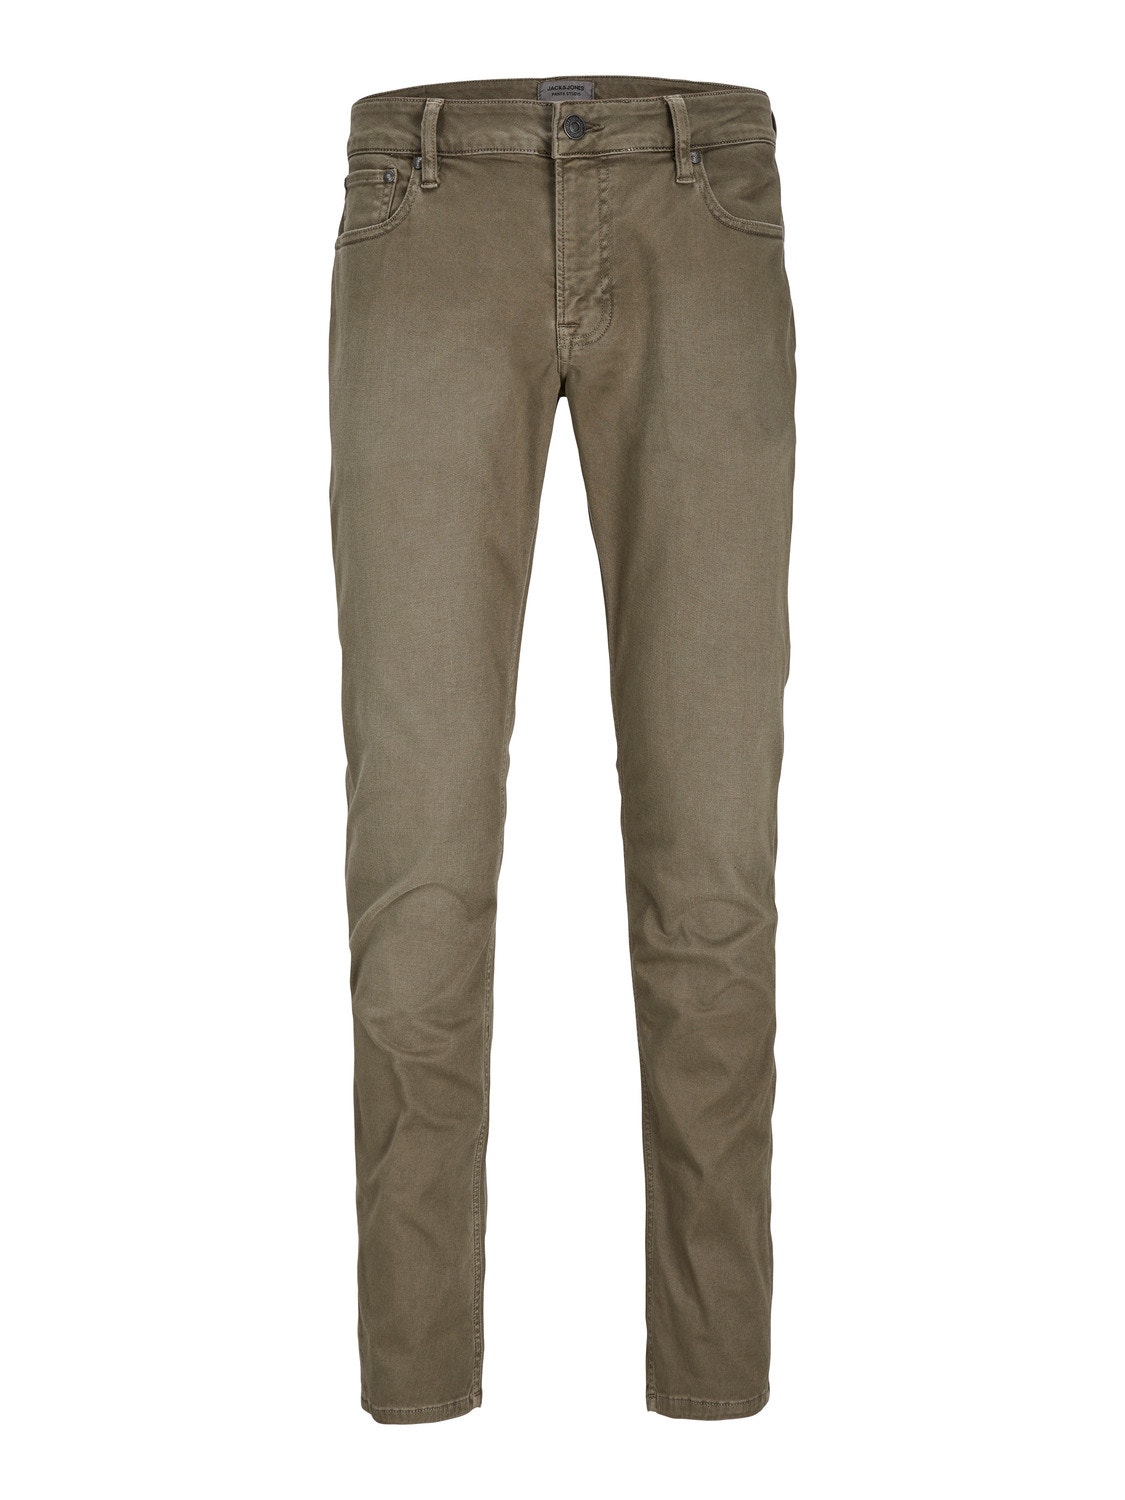 Jack & Jones Slim Fit Chino trousers -Bungee Cord - 12248680